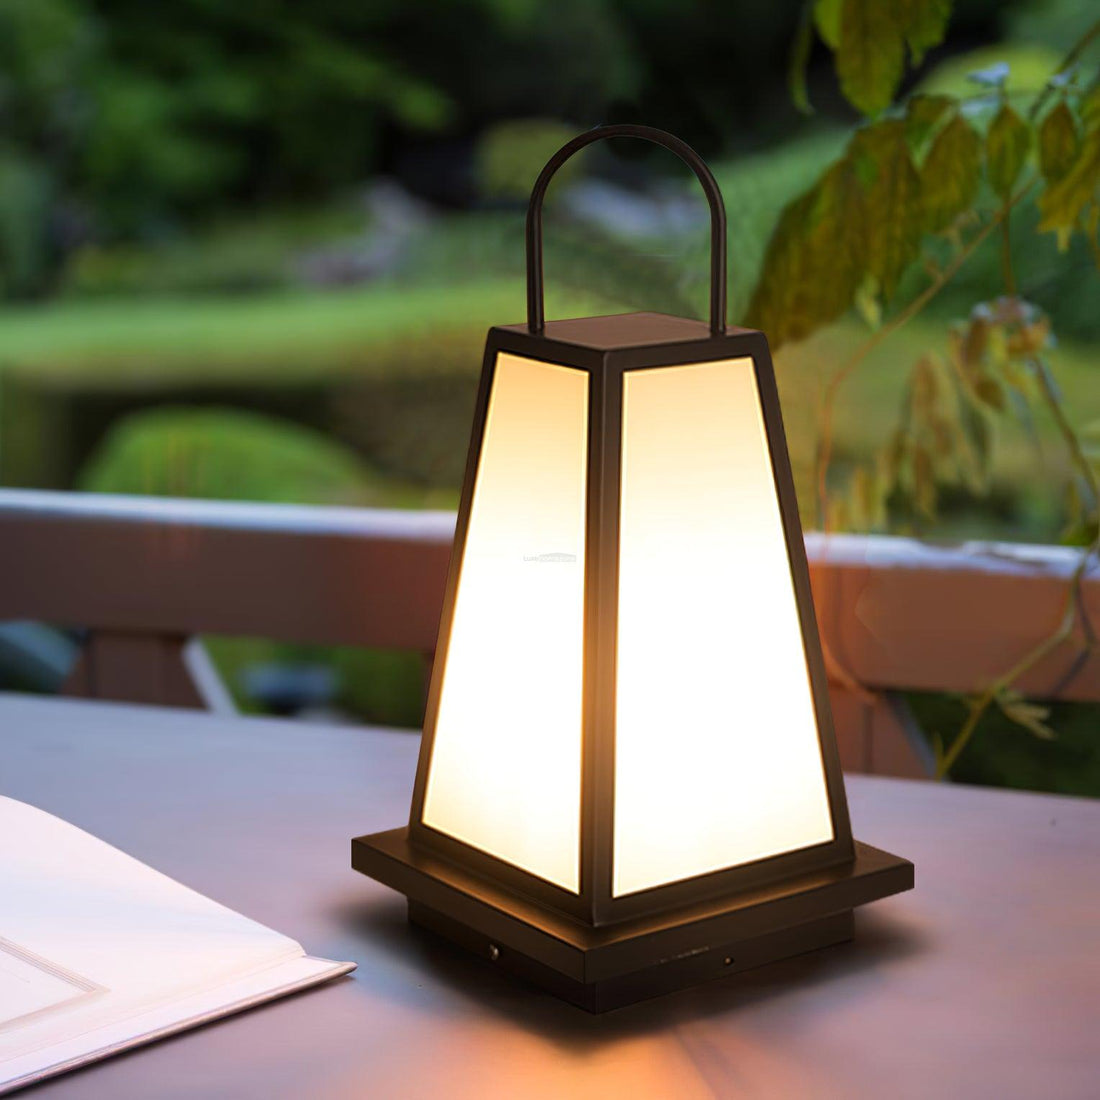 Roam Lantern Table Lamp